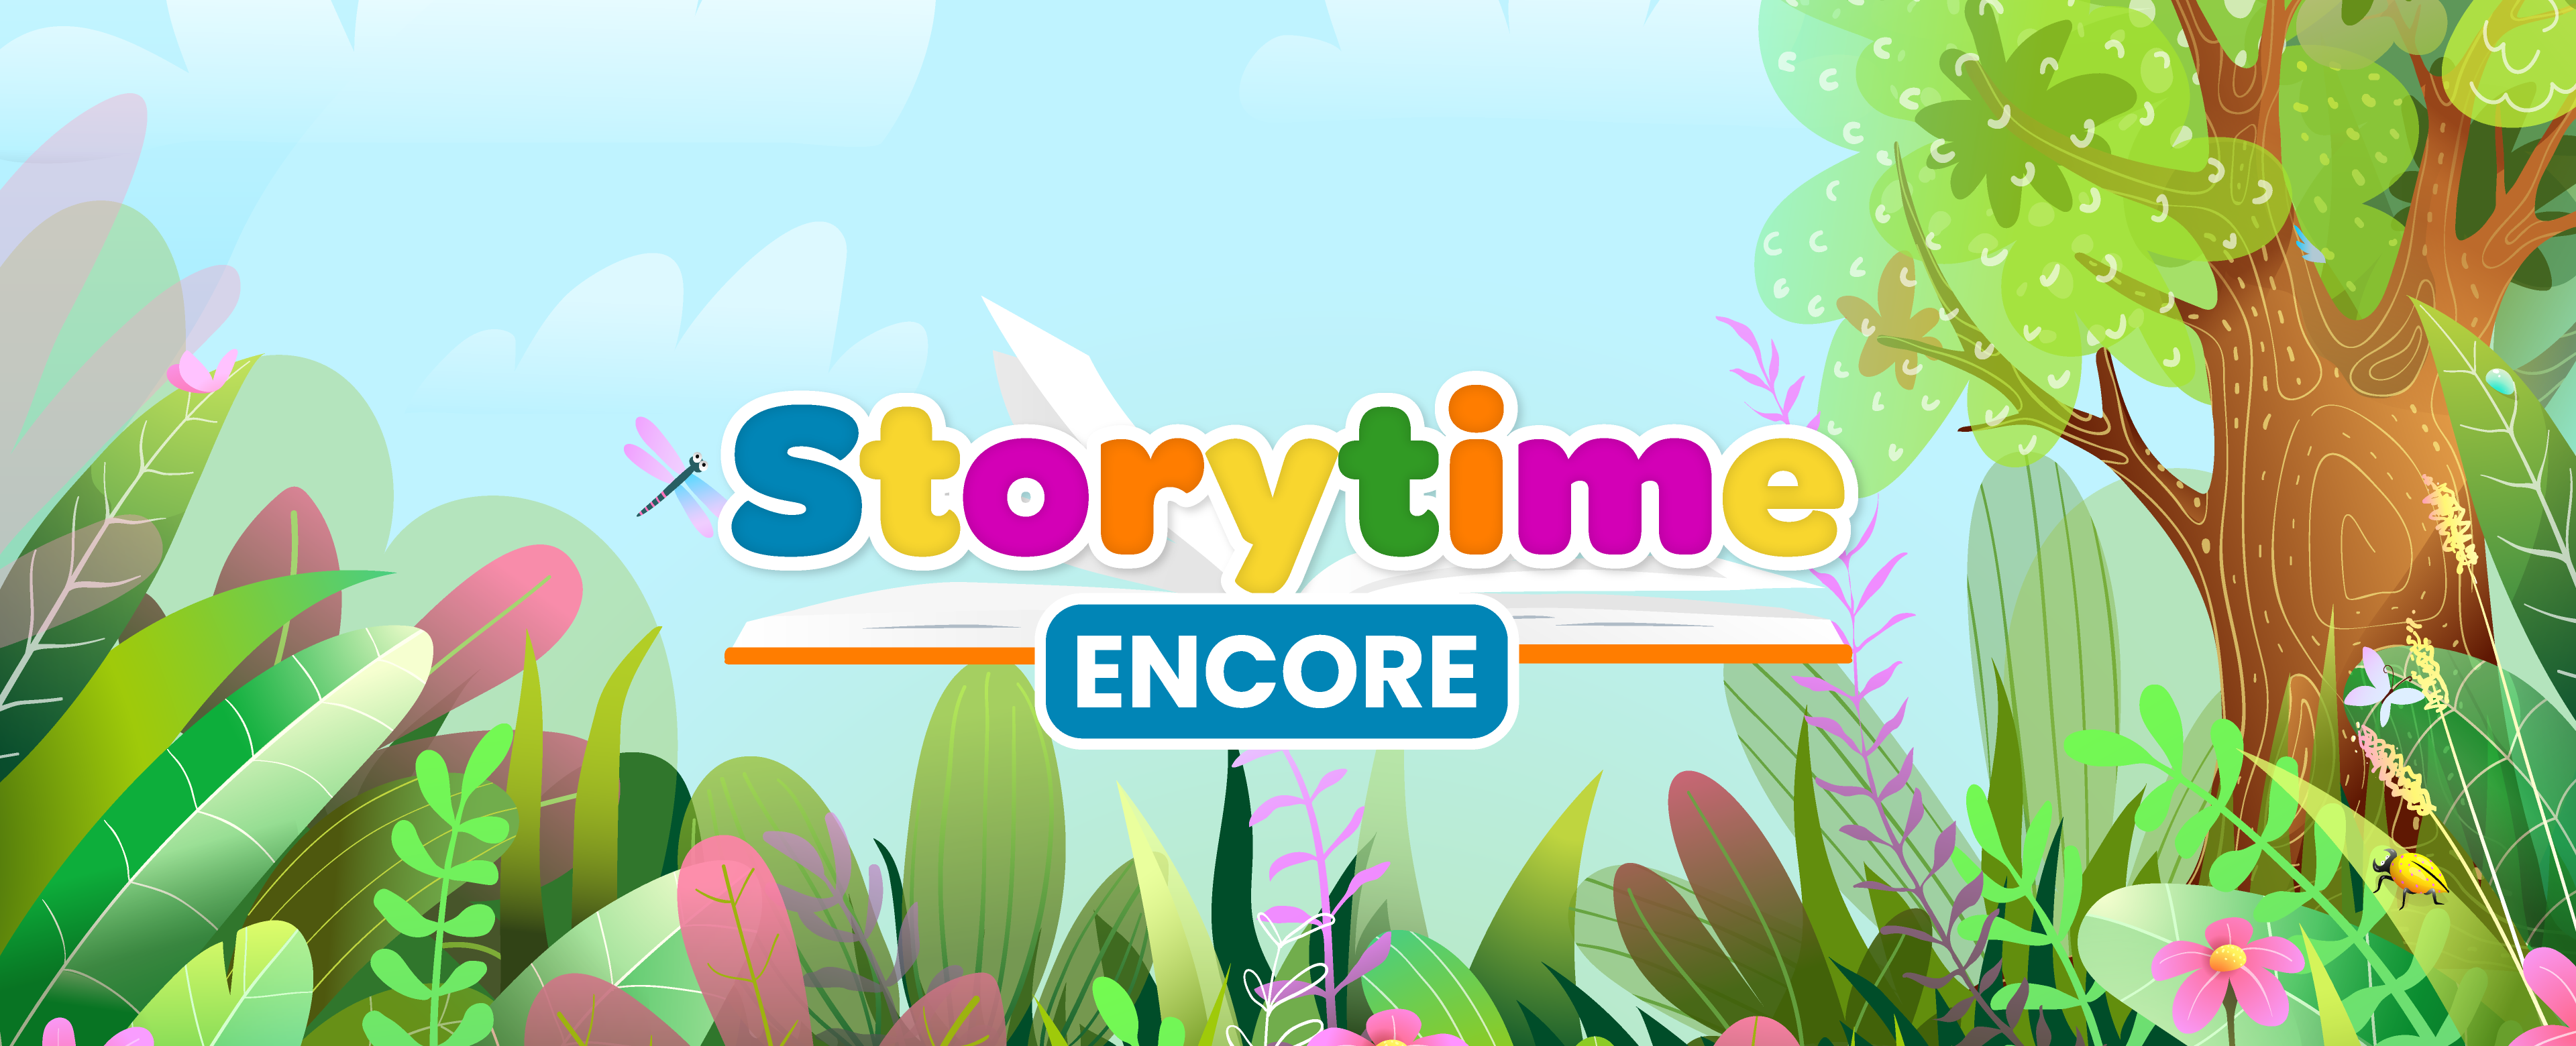 Storytime Encore